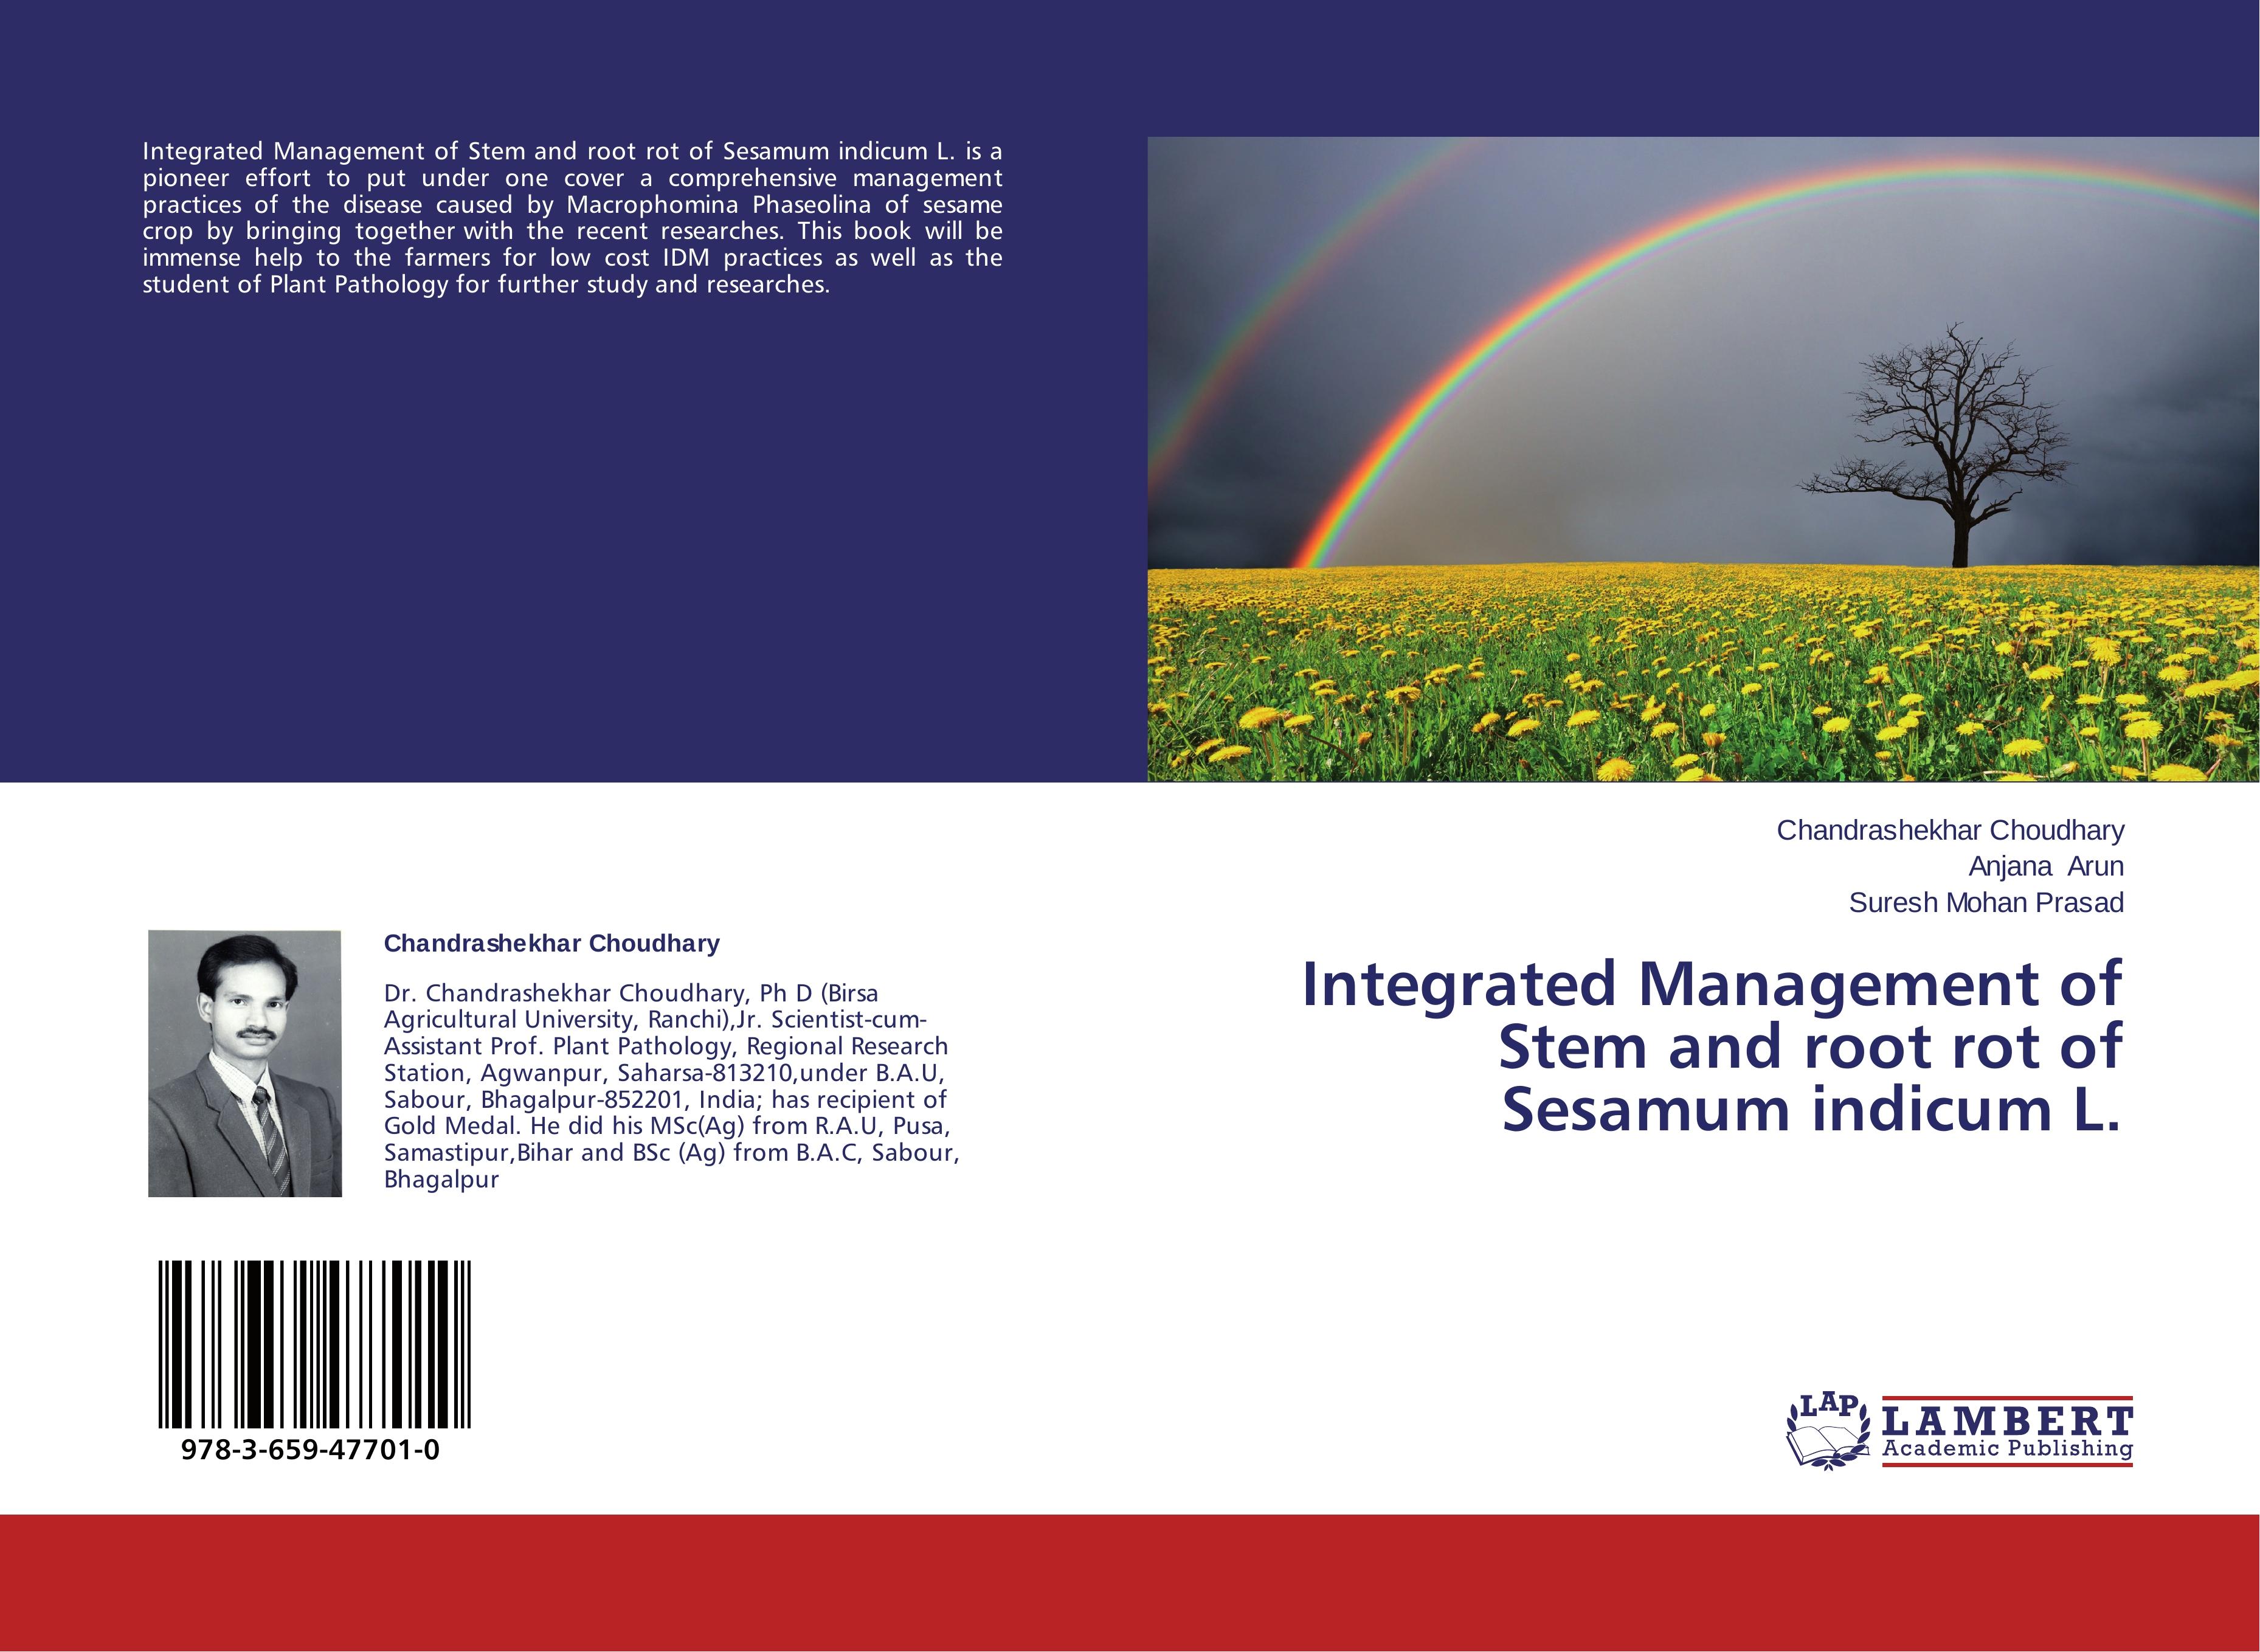 Integrated Management of Stem and root rot of Sesamum indicum L. - Chandrashekhar Choudhary Anjana Arun Suresh Mohan Prasad